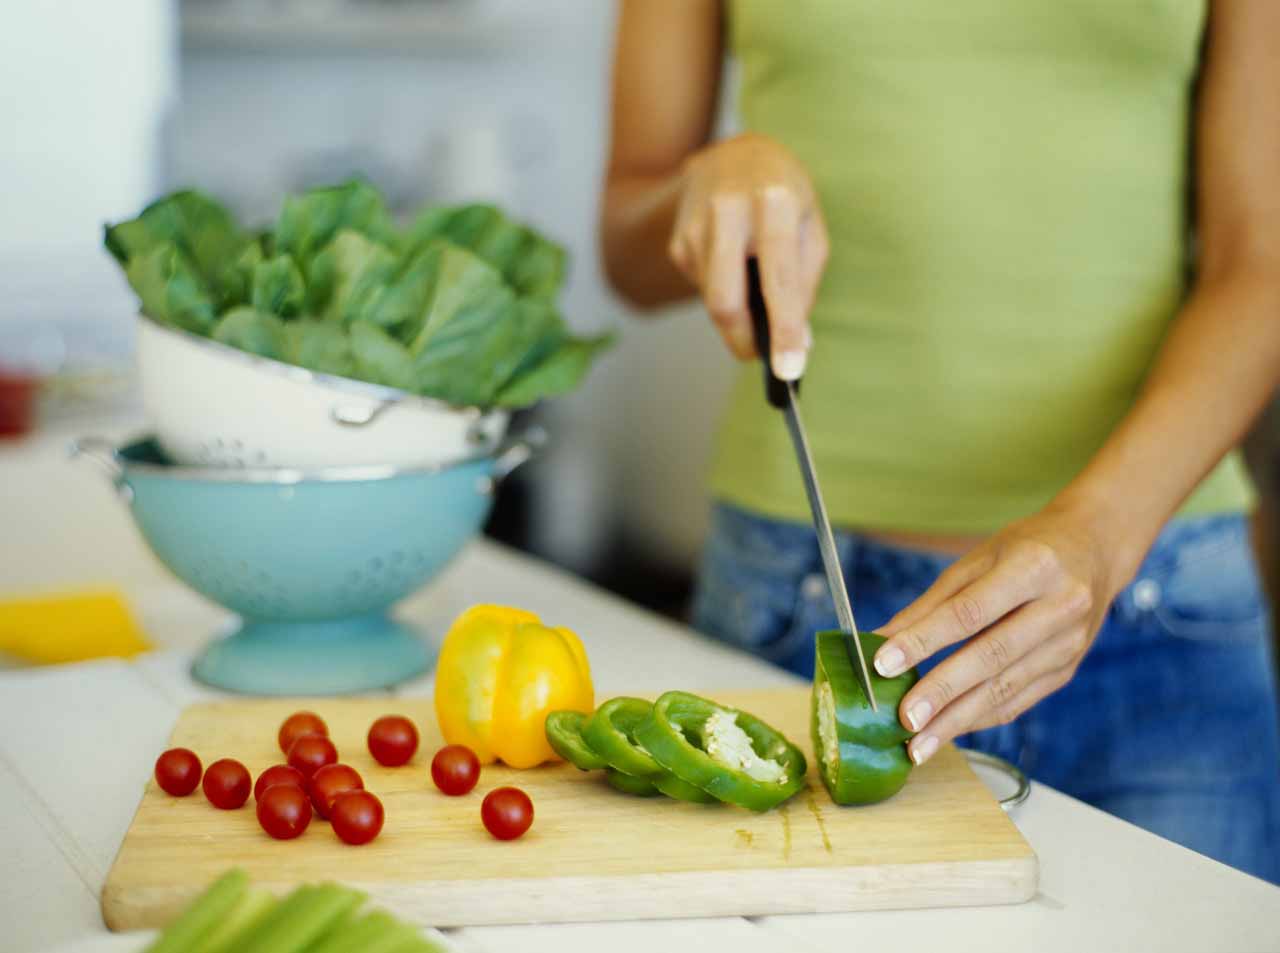 Healthy Cooking Idea: Vegetable Wraps